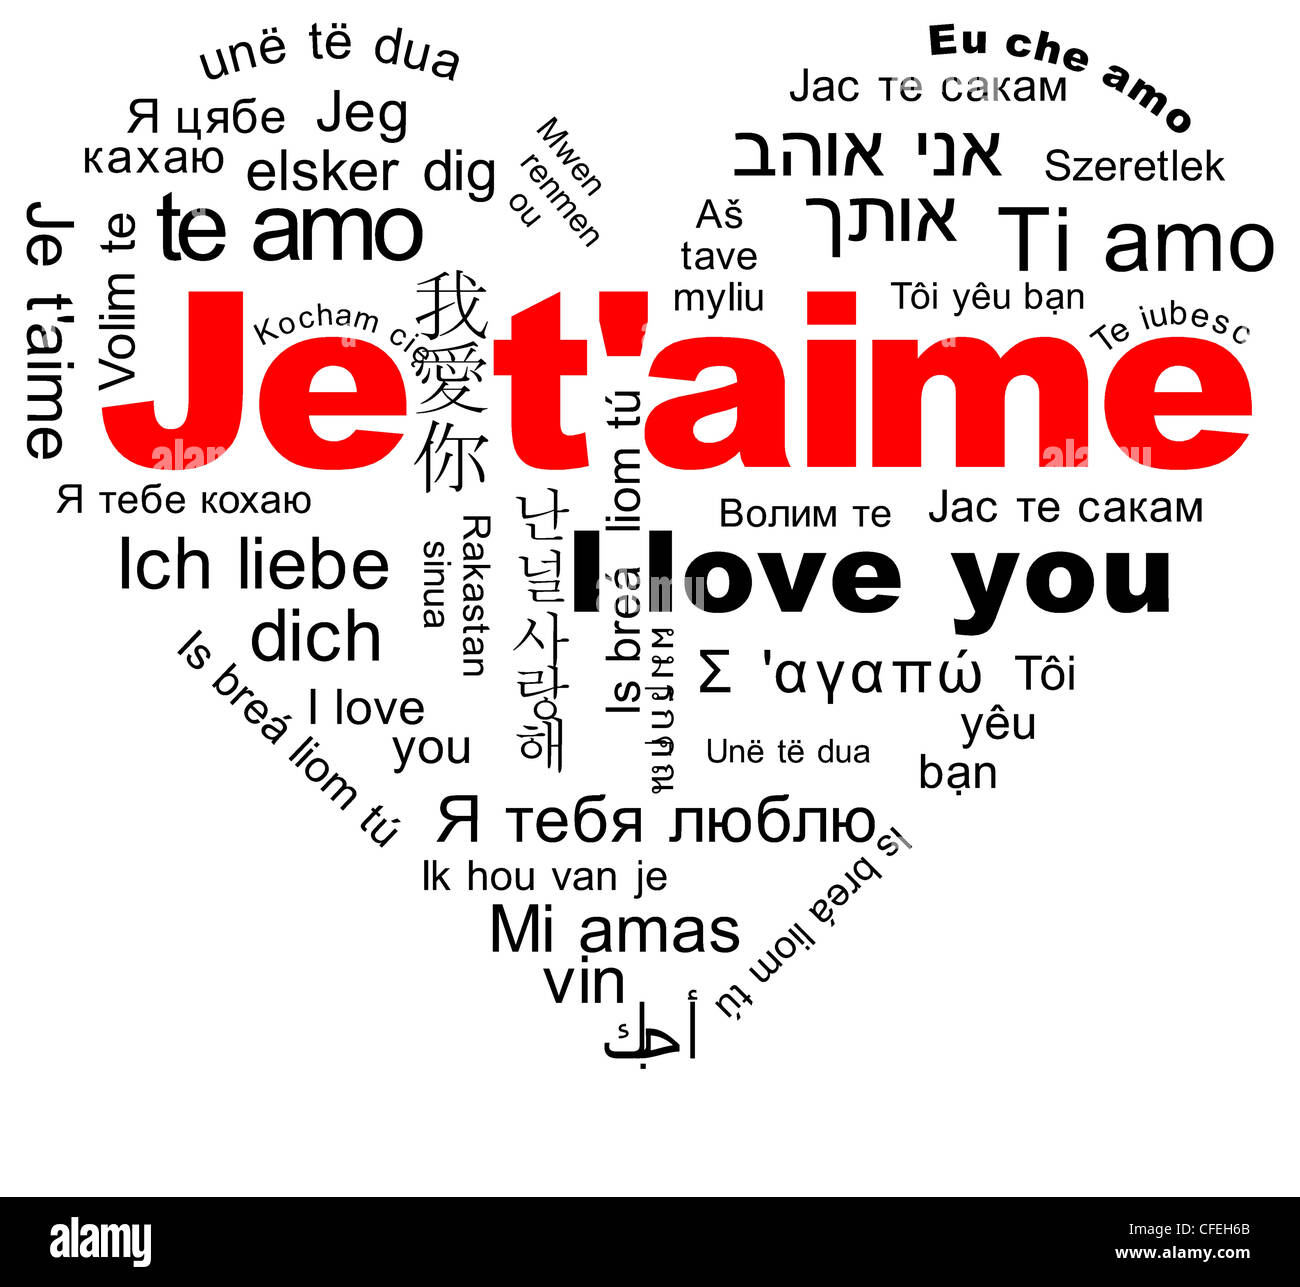 Как будет по французски я тебя люблю. Я тебя люблю на разных языках. Фраза я тебя люблю на разных языках. Слово люблю на разных языках. Я тебя люблю на всех языках.